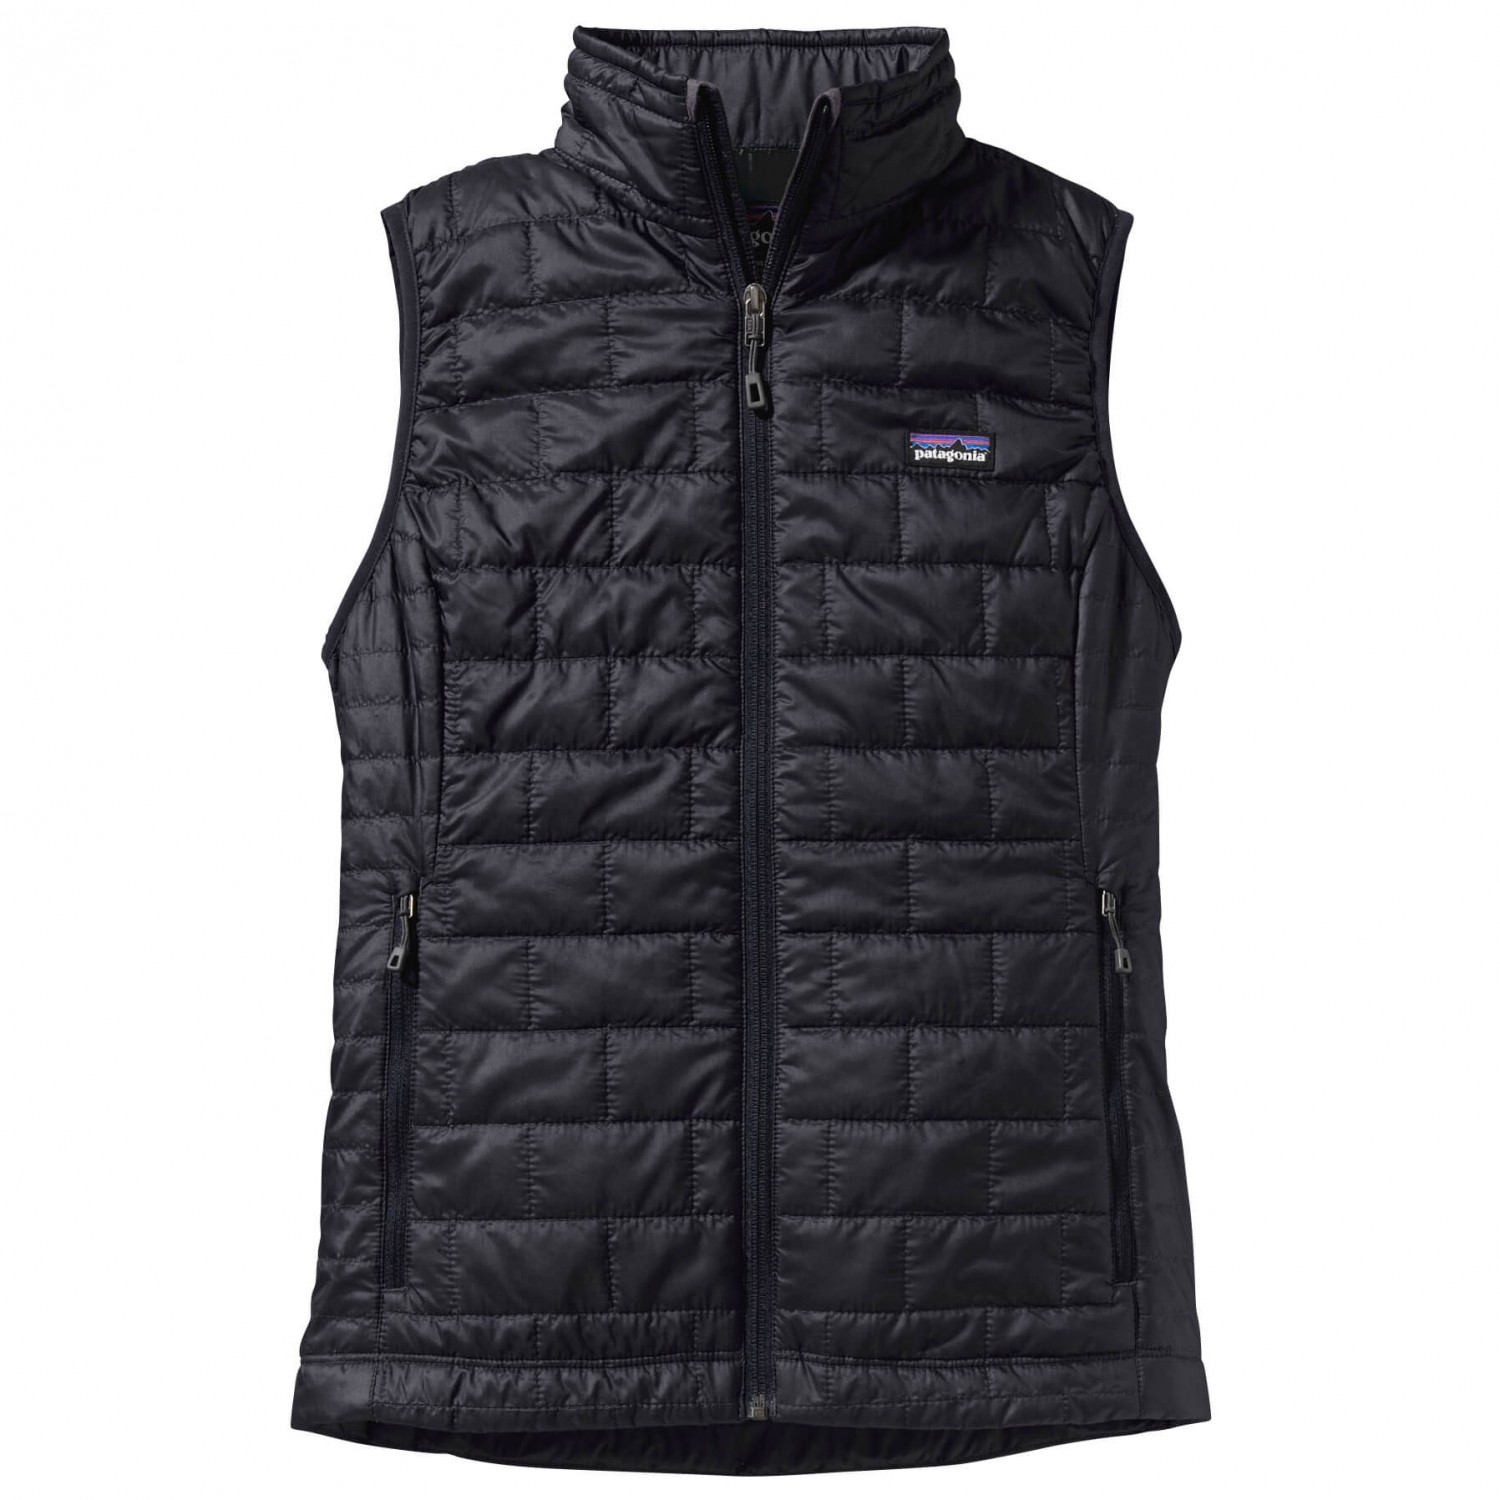 Жилет из синтетического волокна Patagonia Women's Nano Puff Vest, черный цена и фото